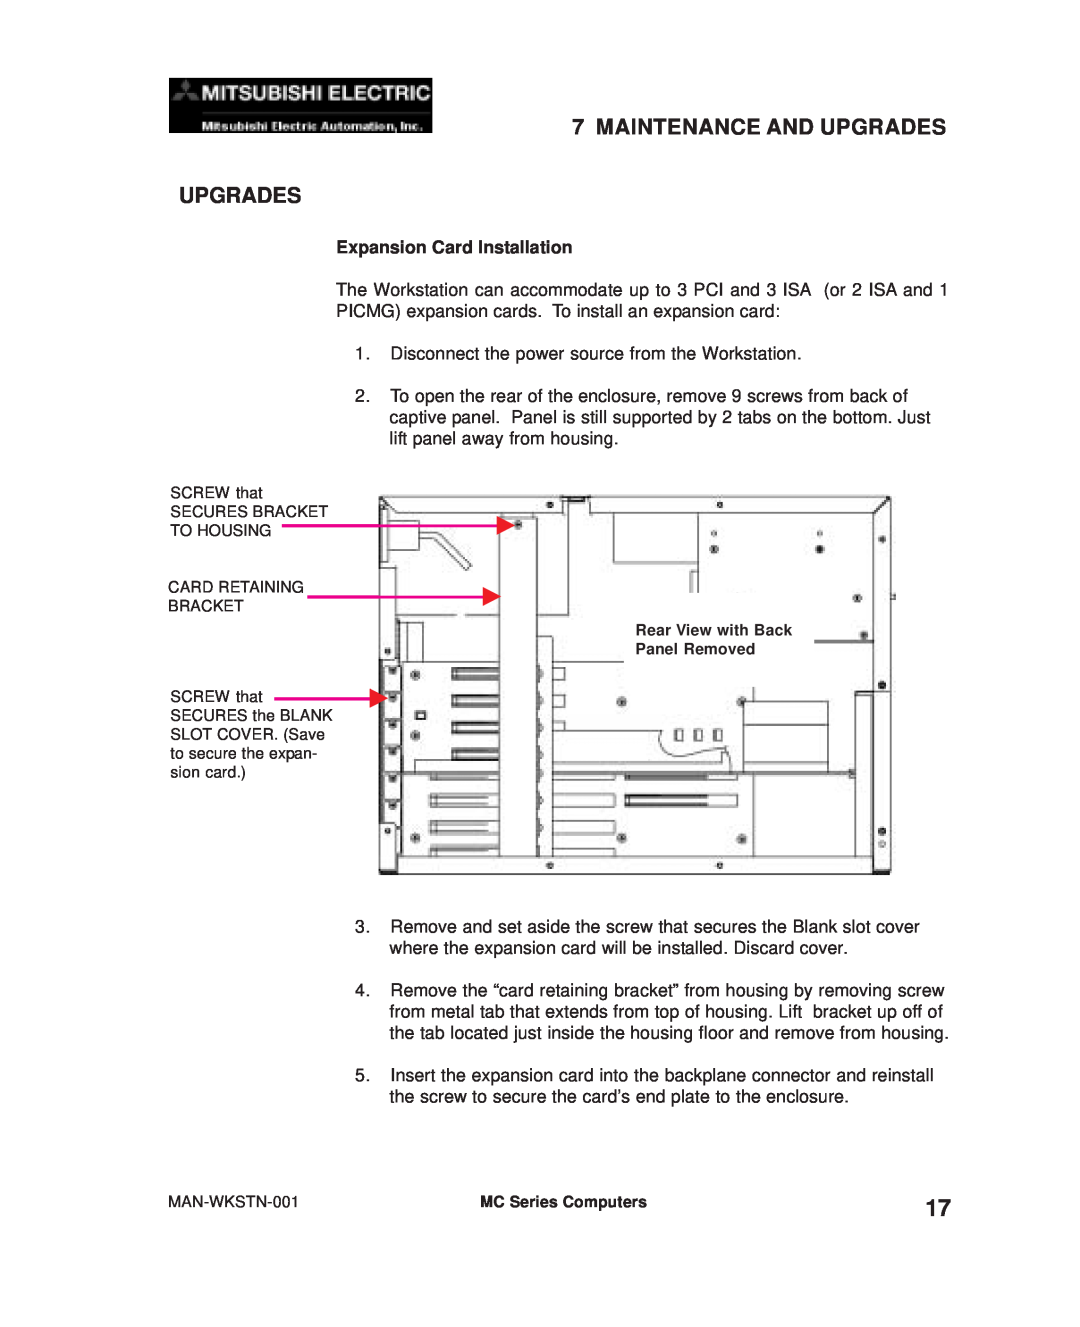 Mitsubishi Electronics MC300 manual Maintenance And Upgrades Upgrades, Expansion Card Installation 